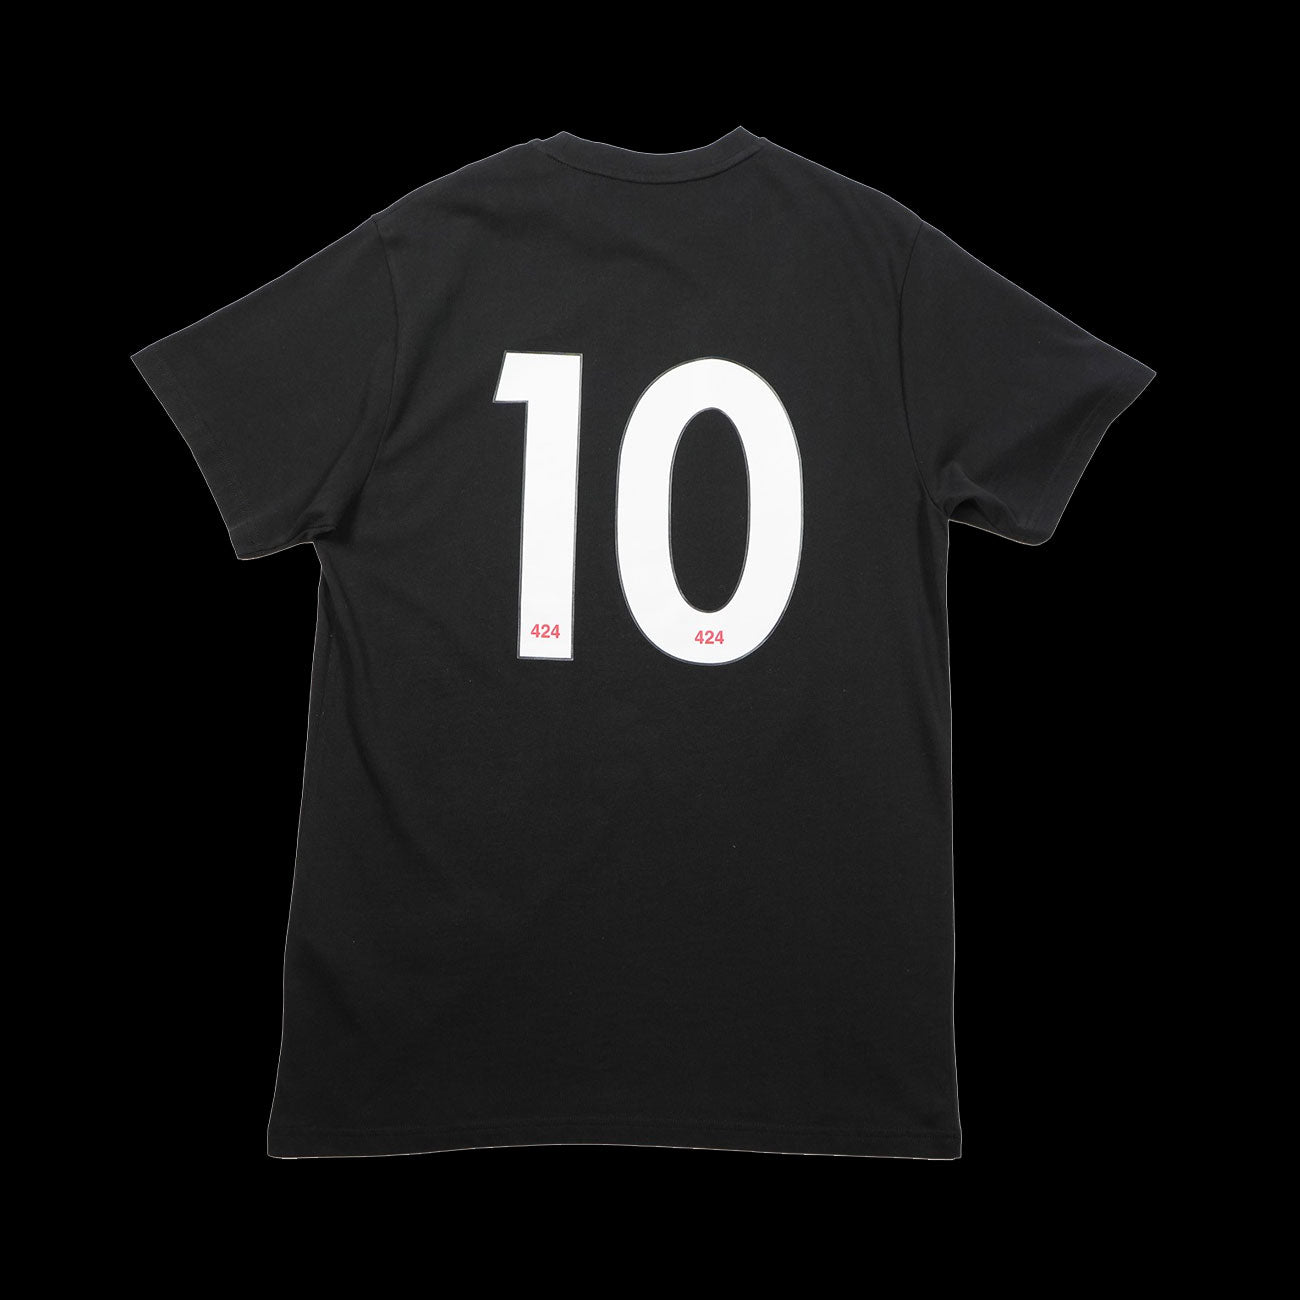 424 Stampata T-Shirt Regular Fit (Black)